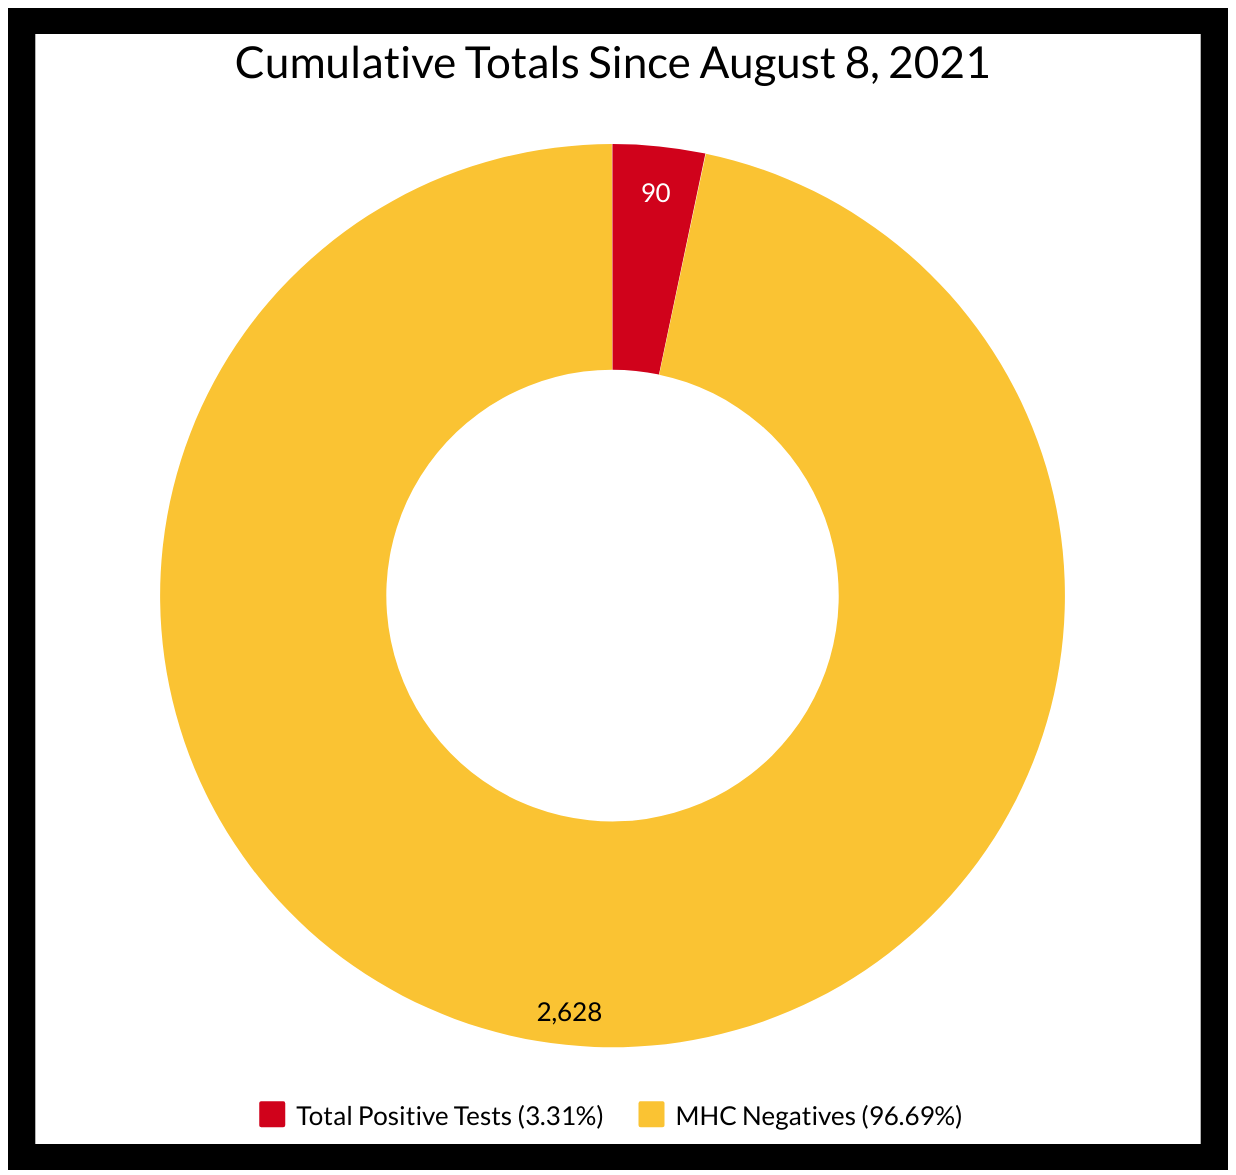 Cumulative Testing Data Since August 8, 2021